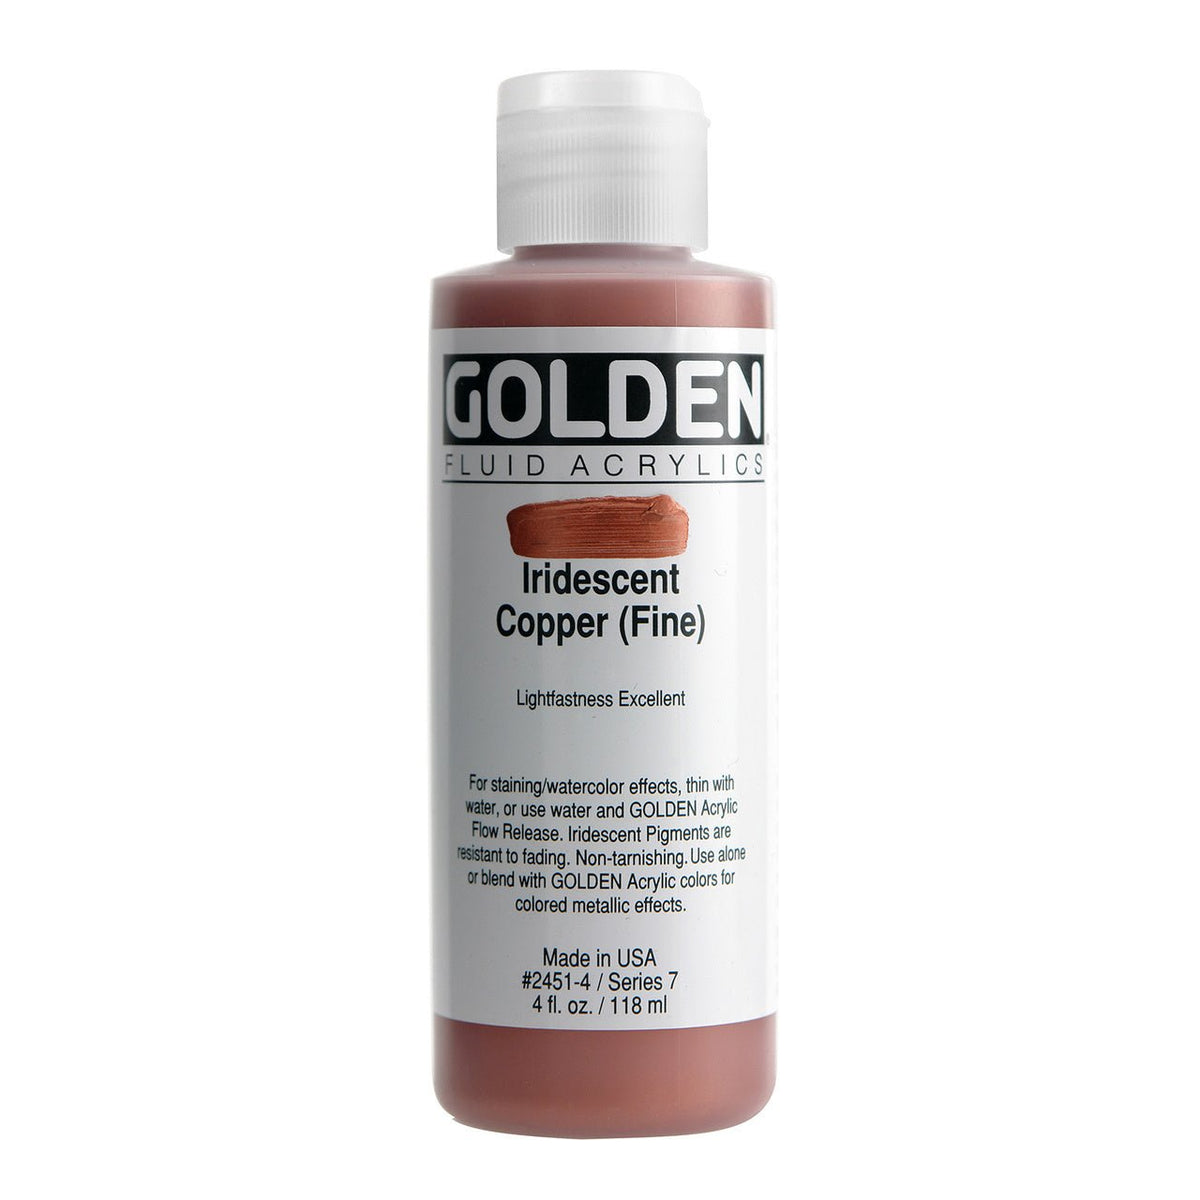 Golden Fluid Acrylic Iridescent Copper (fine) 4 oz - merriartist.com